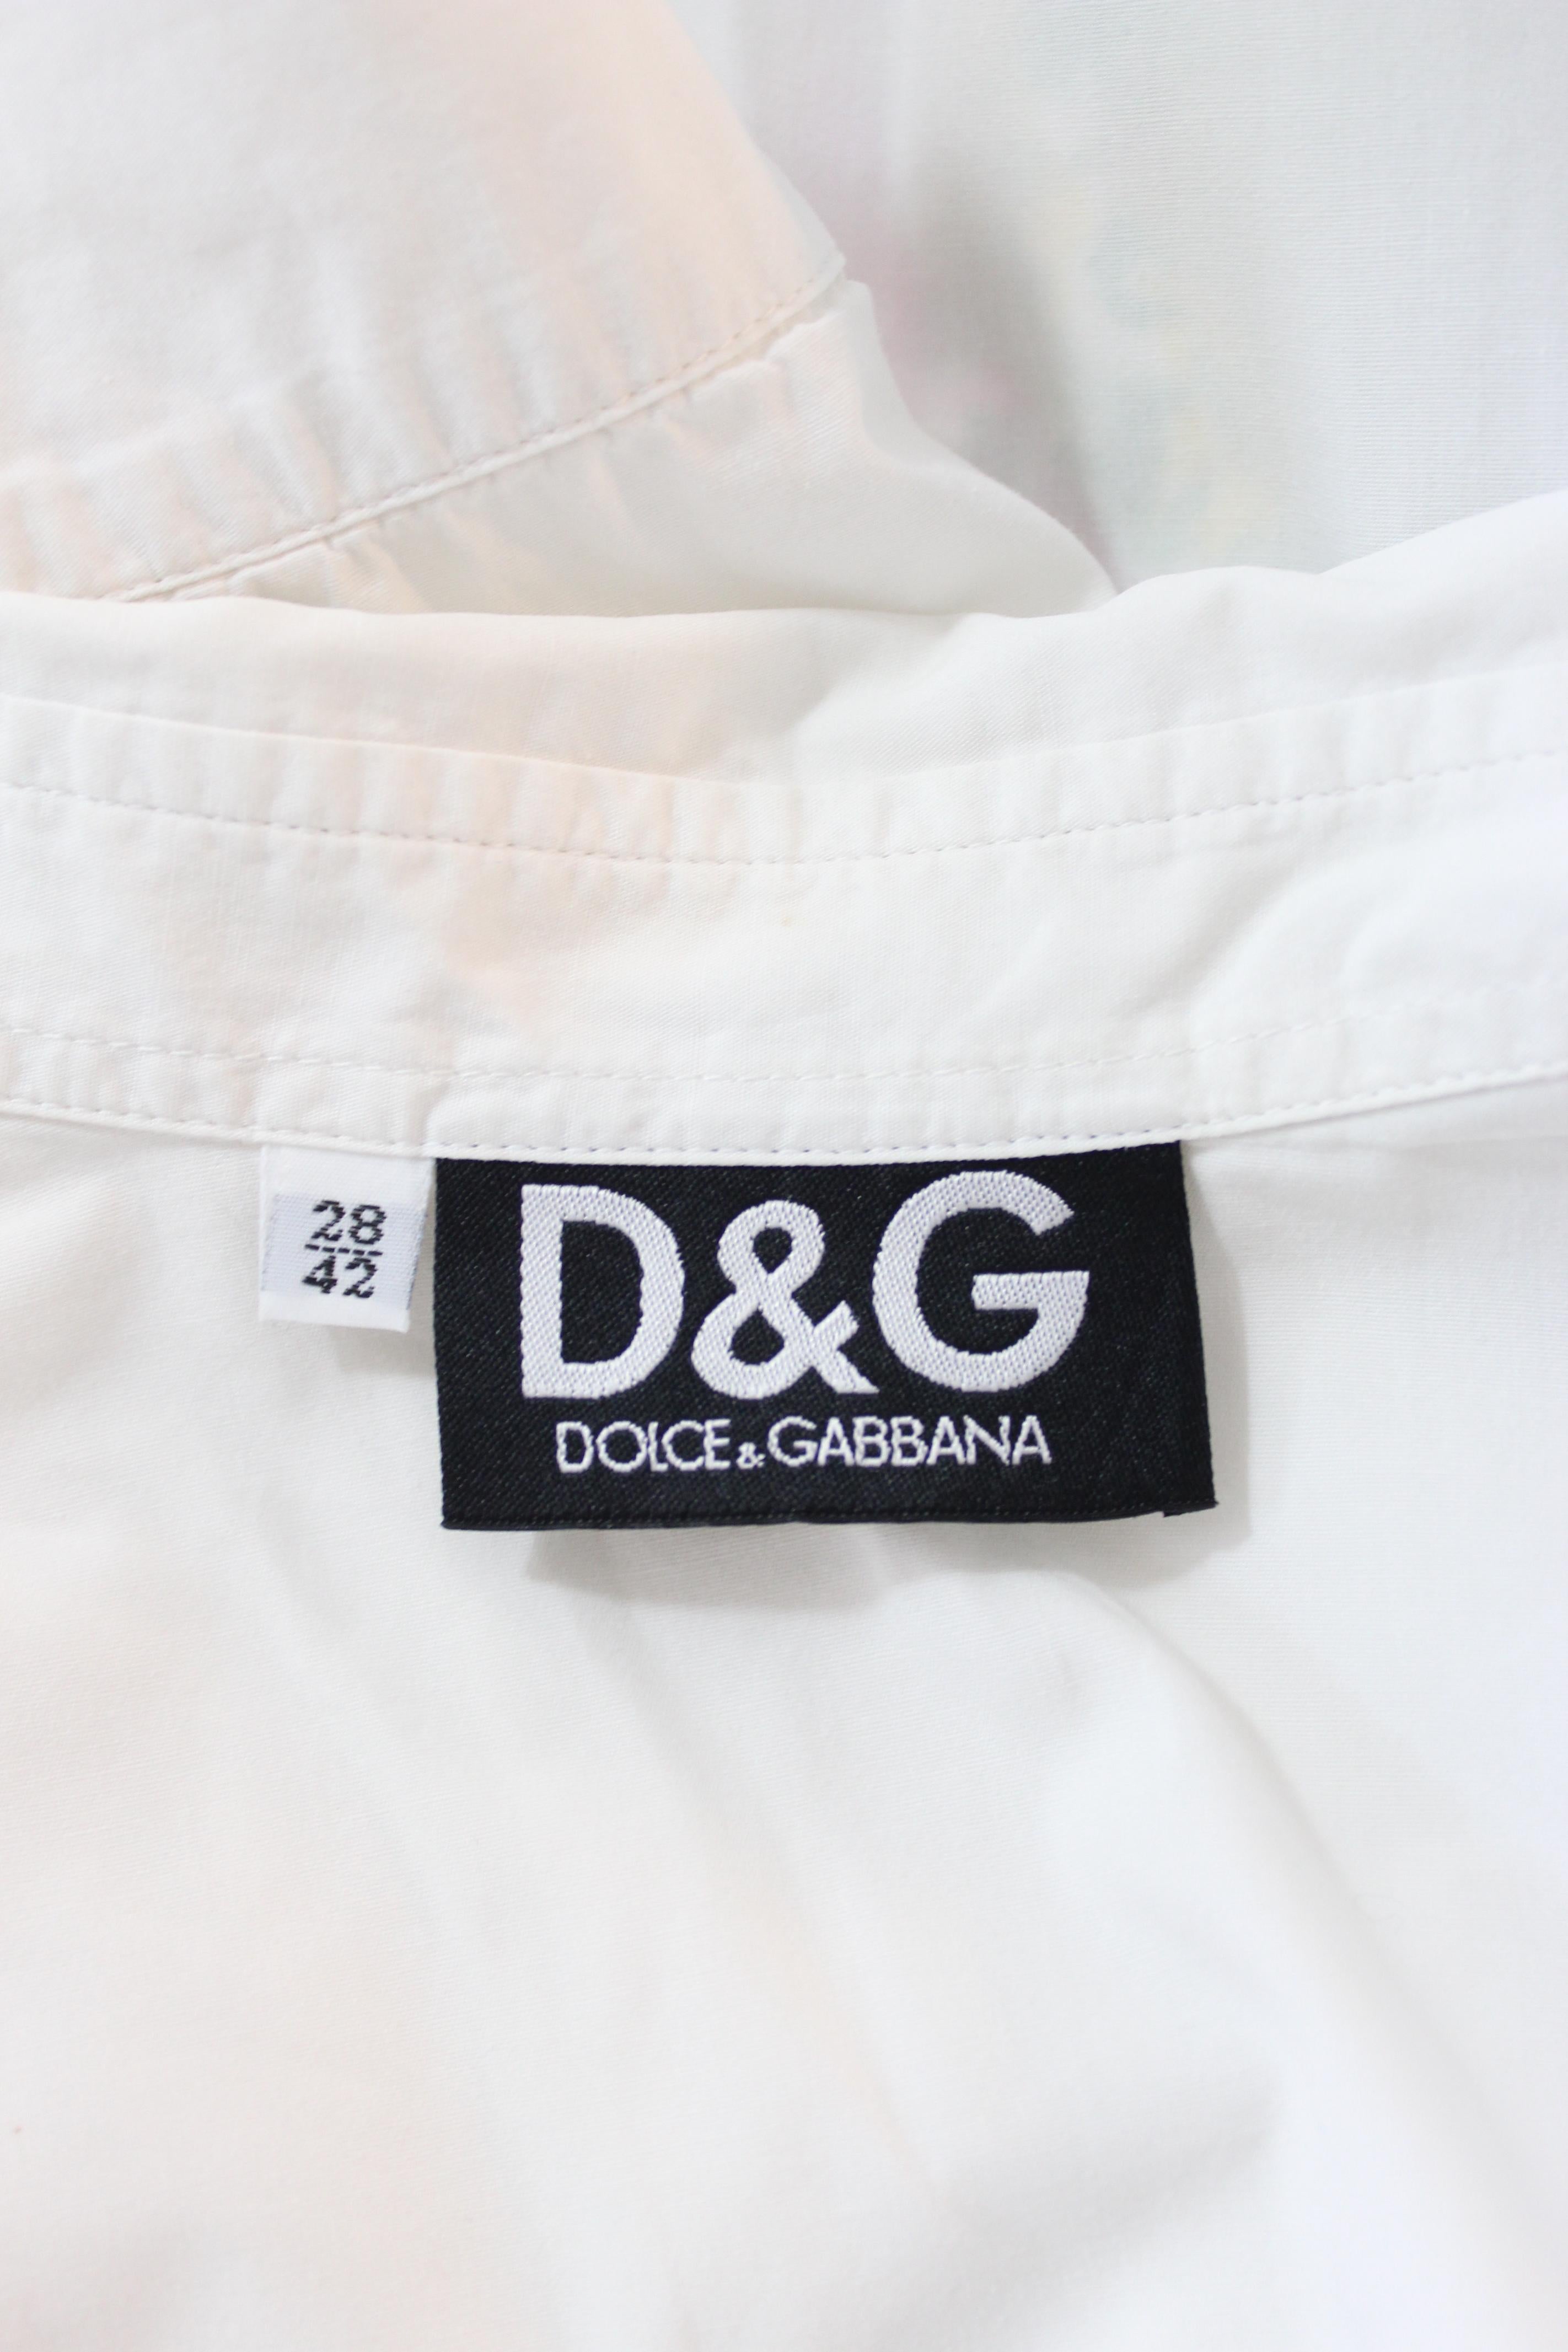 Gray Dolce Gabbana White Cotton Long Maxi Chemise Dress Shirt 2000s